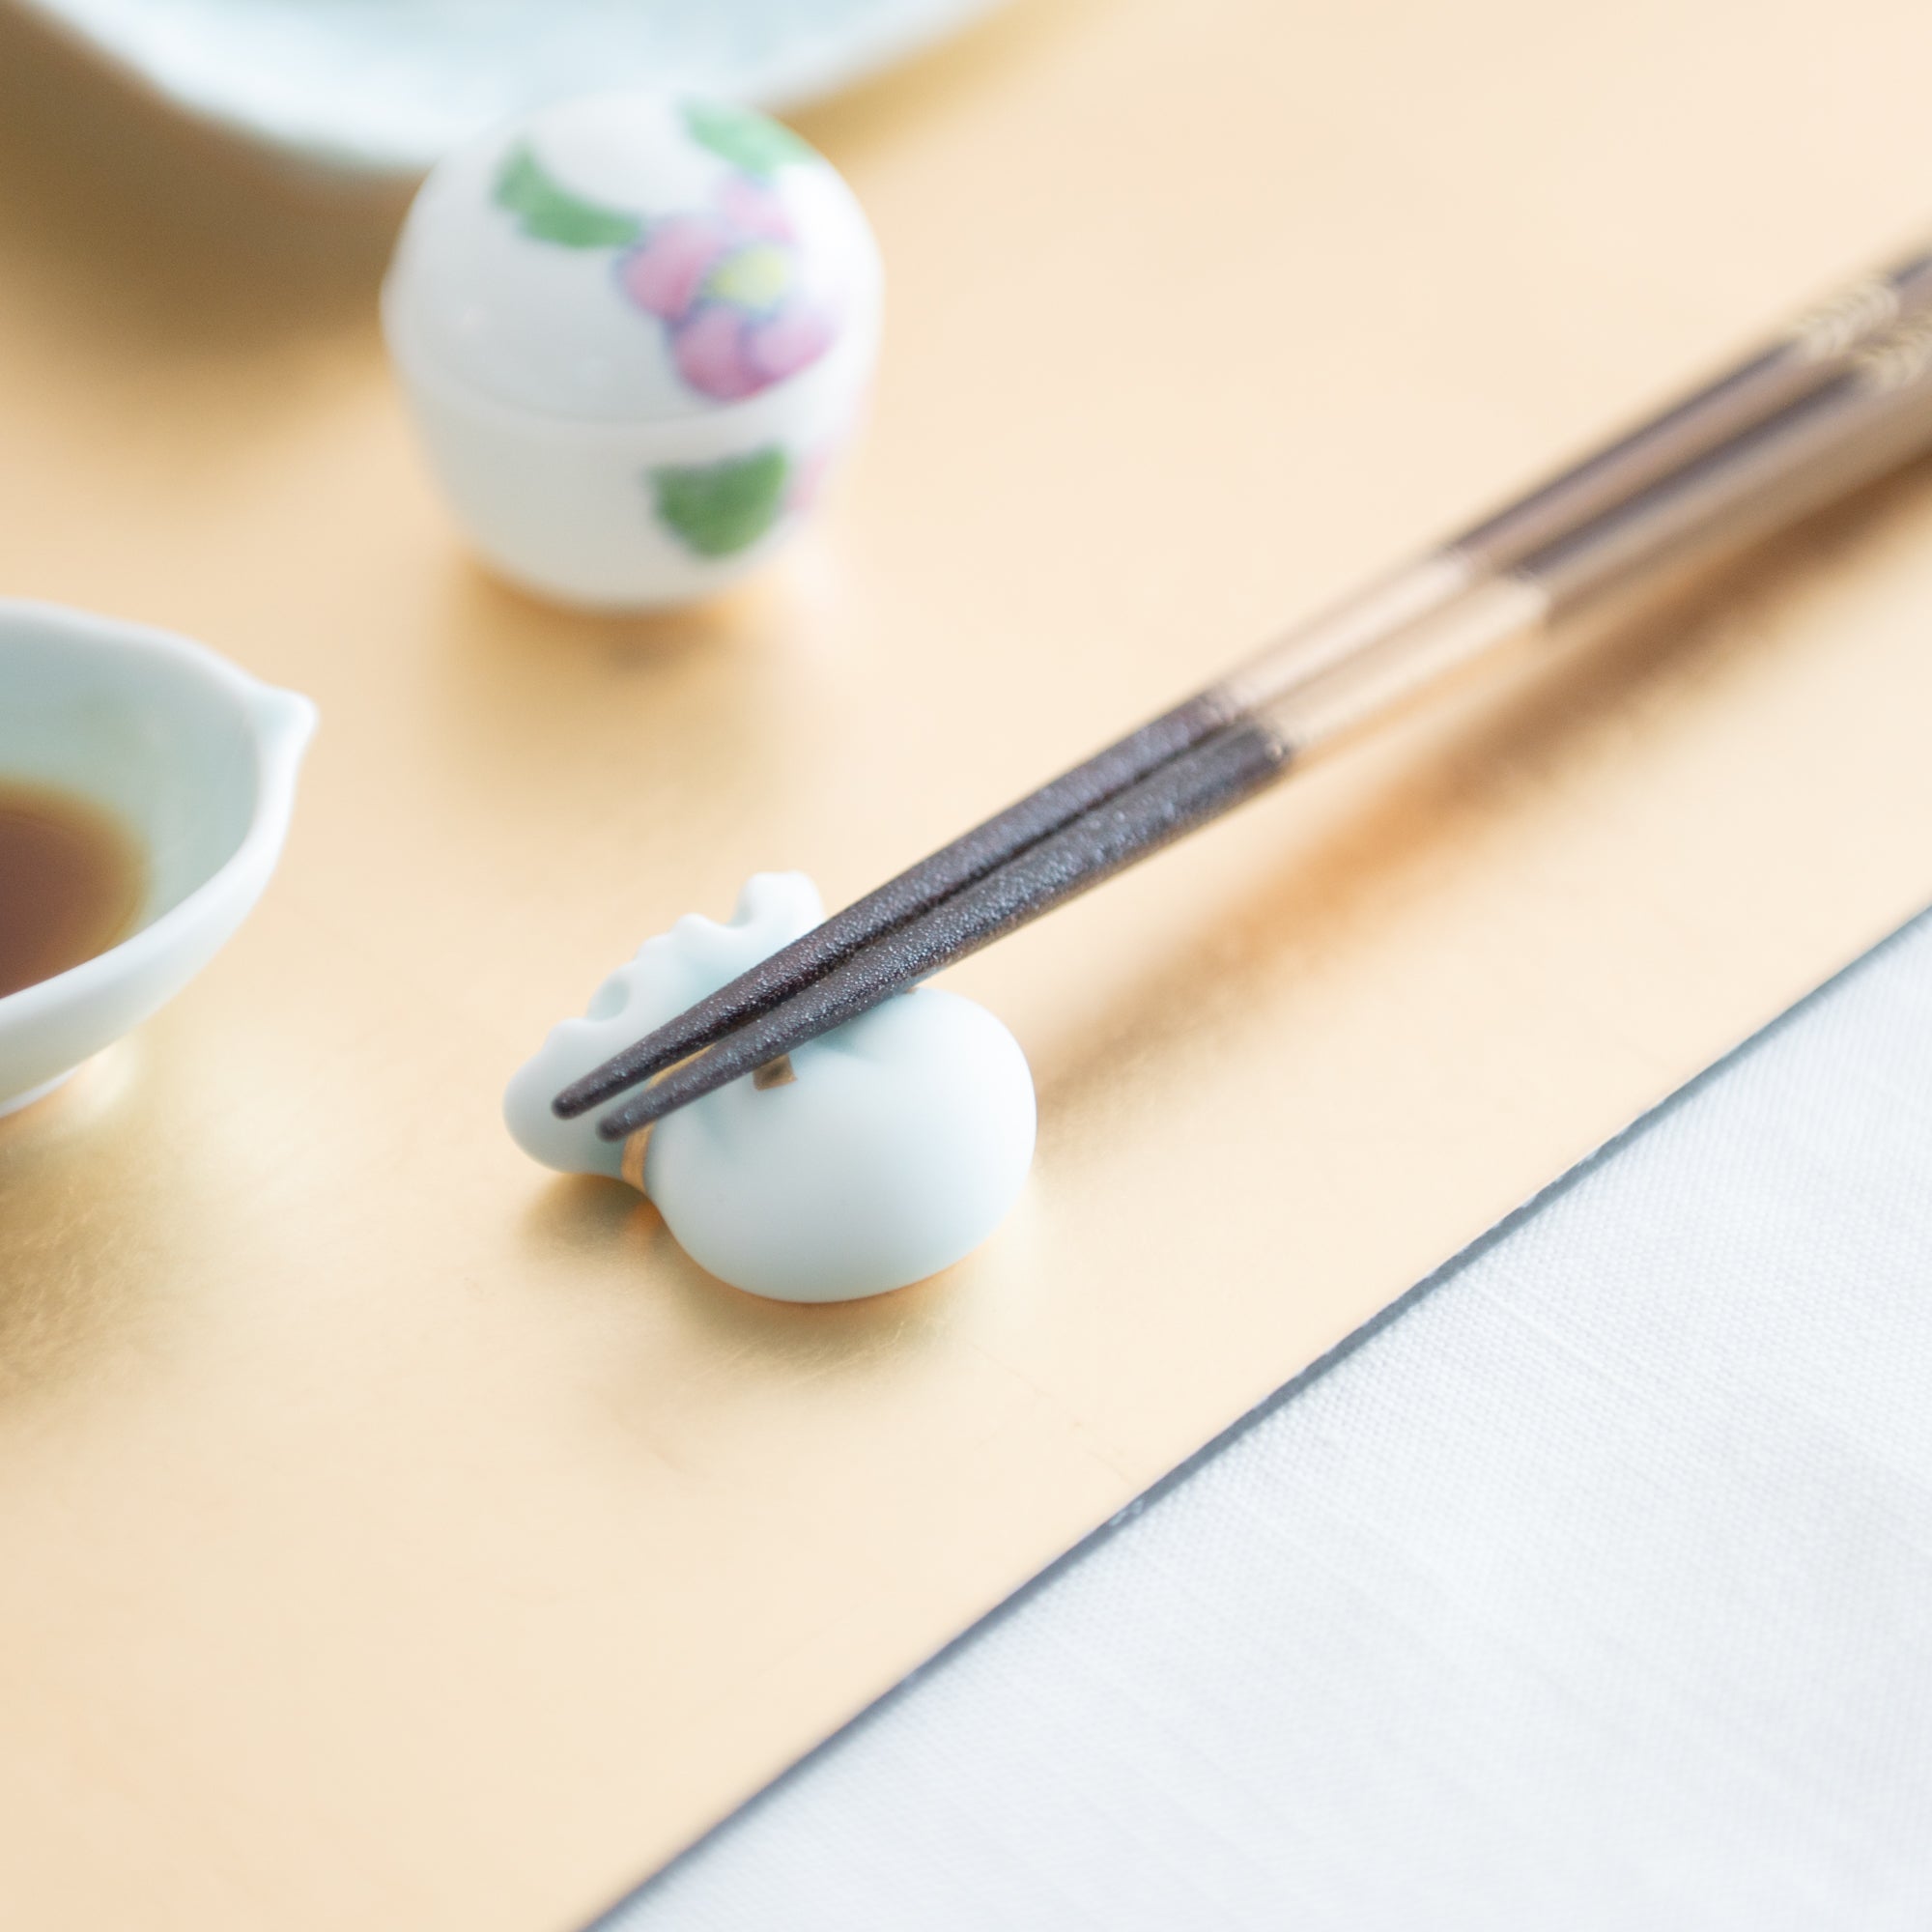 Hataman Touen Moist Collection of Treasures Imari Nabeshima Ware Chopstick Rest Set